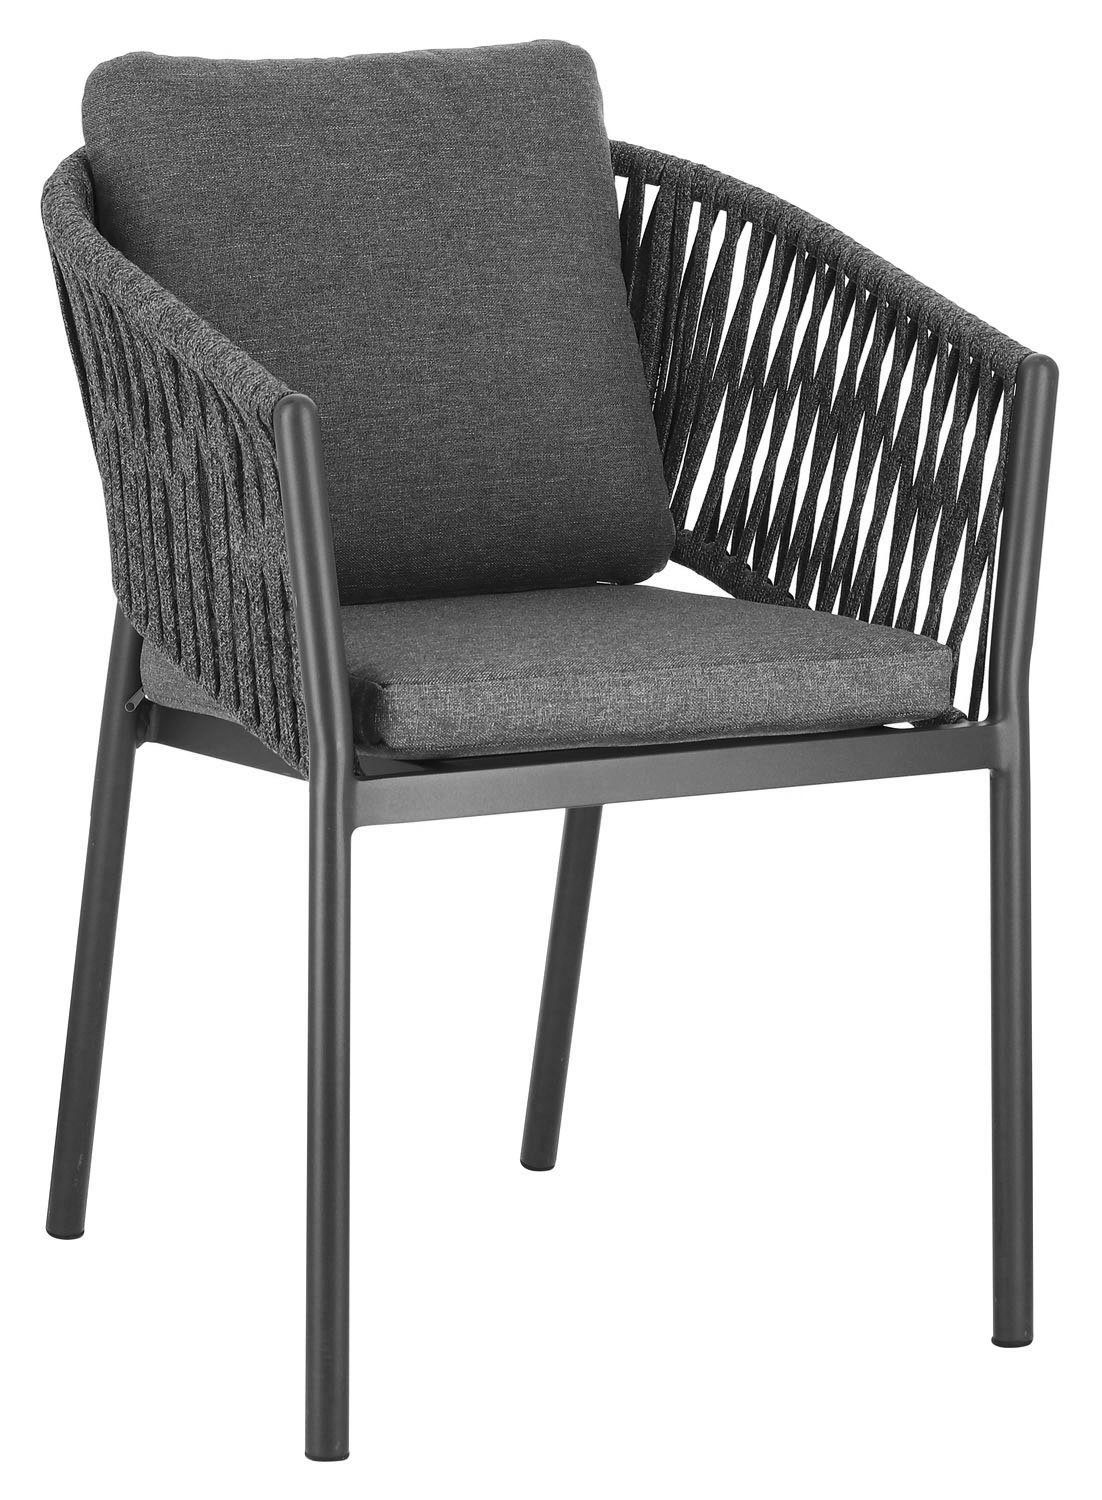 Bizzotto Gartenstuhl FLORENCIA, Dunkelgrau, Aluminium, Tetorongeflecht, (1  St), Stapelbar, mit Sitzkissen | Stühle